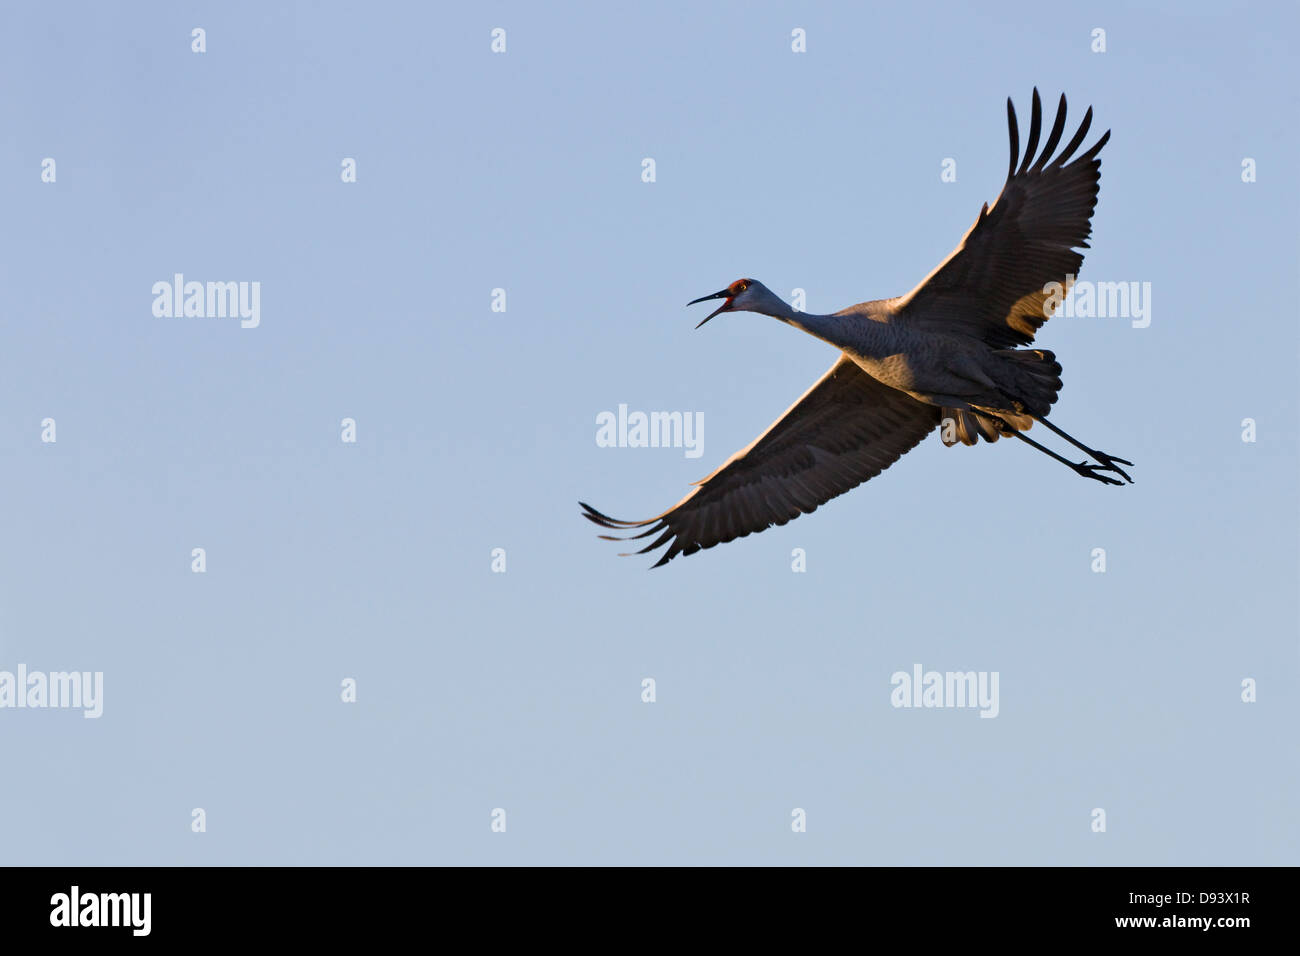 Sandhill crane flying against clear sky Stock Photo